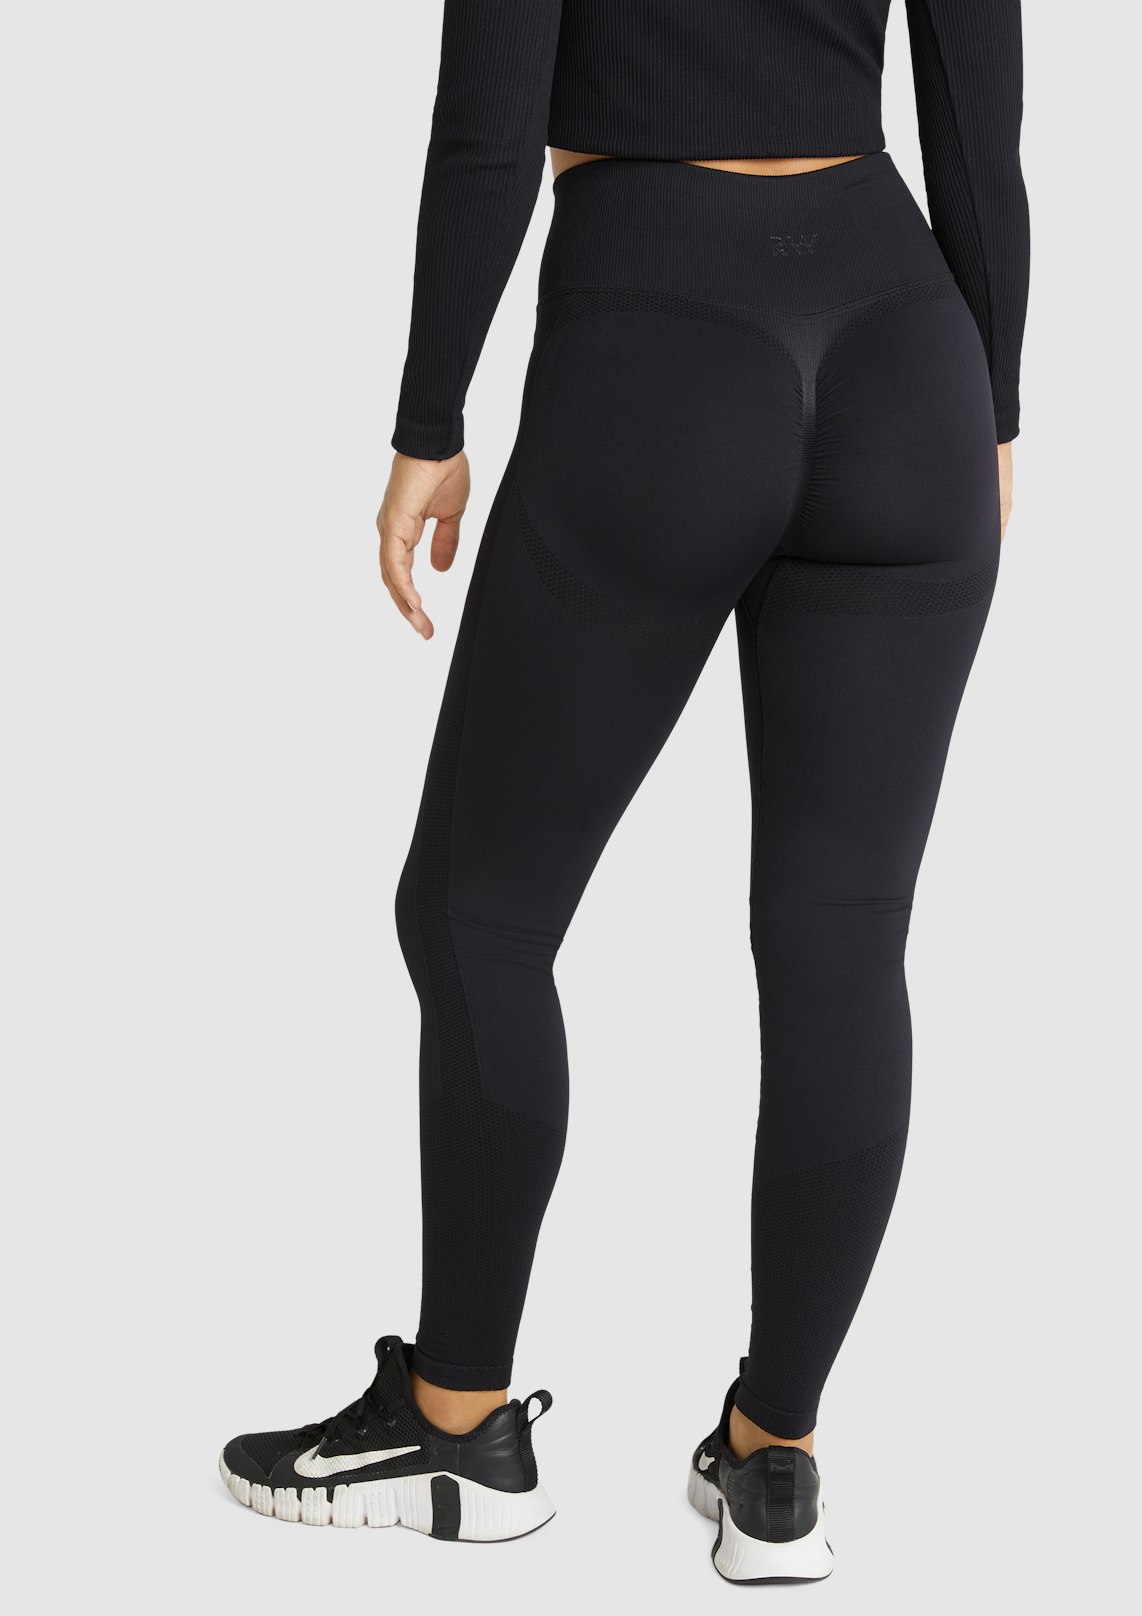 leggings size Medium Yoga Pants scrunch Bum Black High Rise Full Length